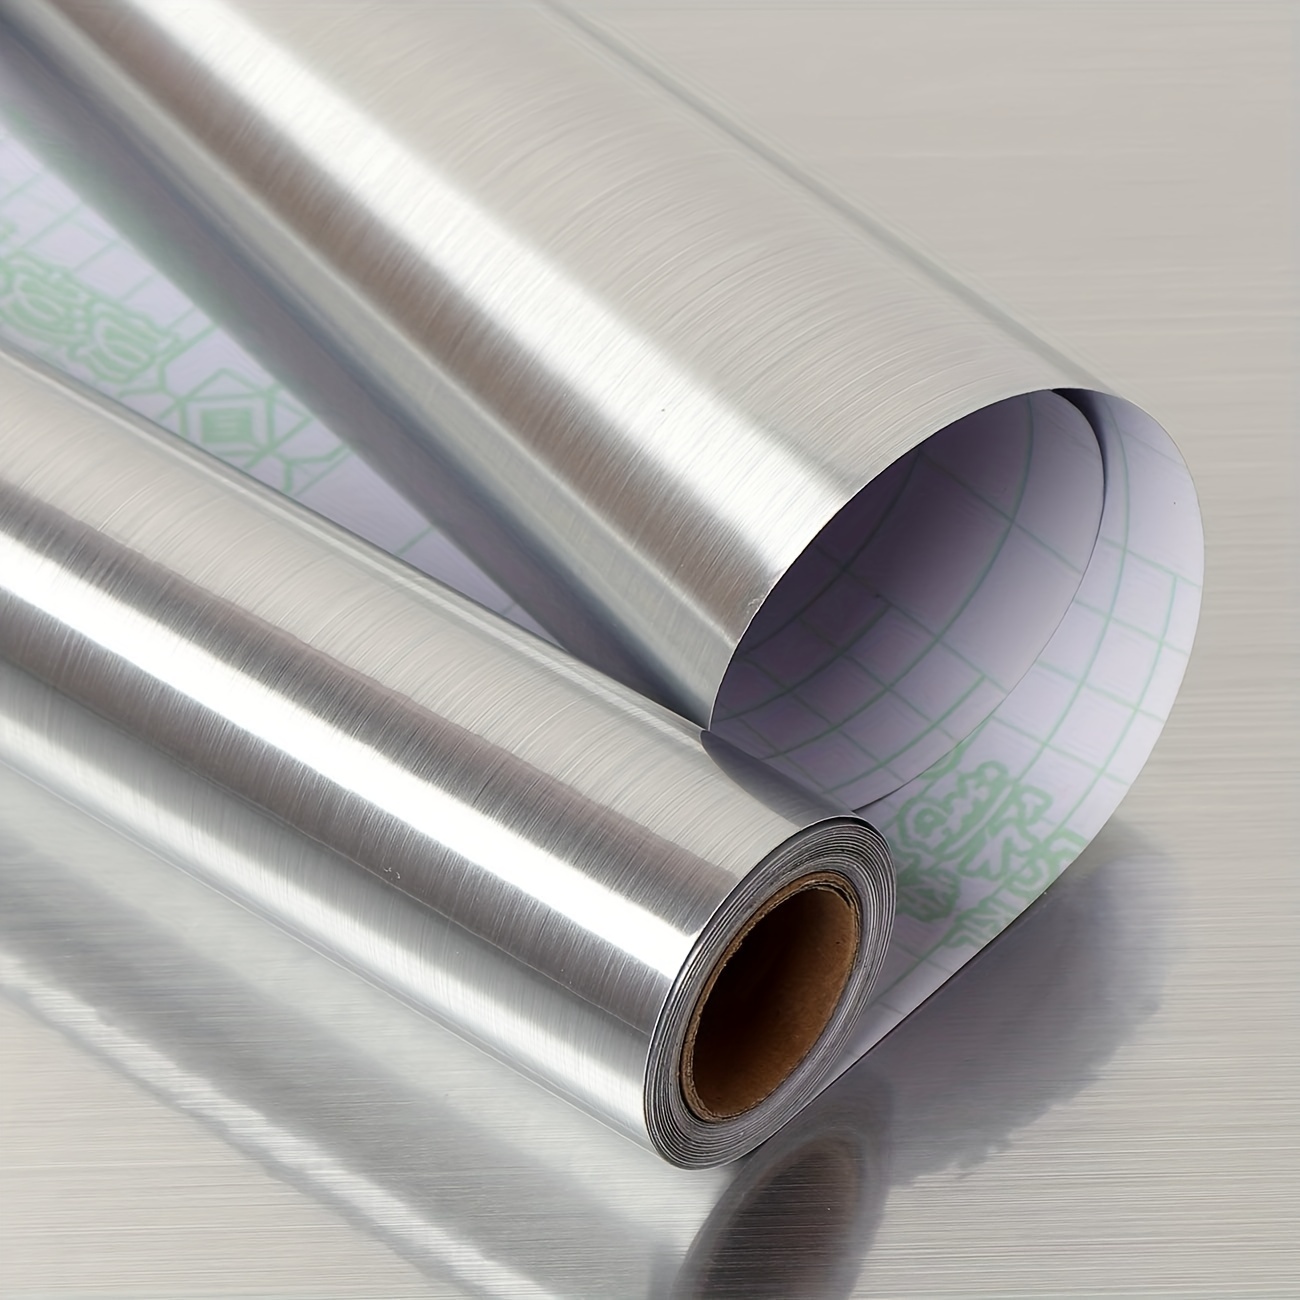 Stainless Steel Contact Paper for Countertop Waterproof Silver Metallic  Wallpaper Peel and Stick Kitchen Backsplash Self Adhesive Dishwasher Fridge